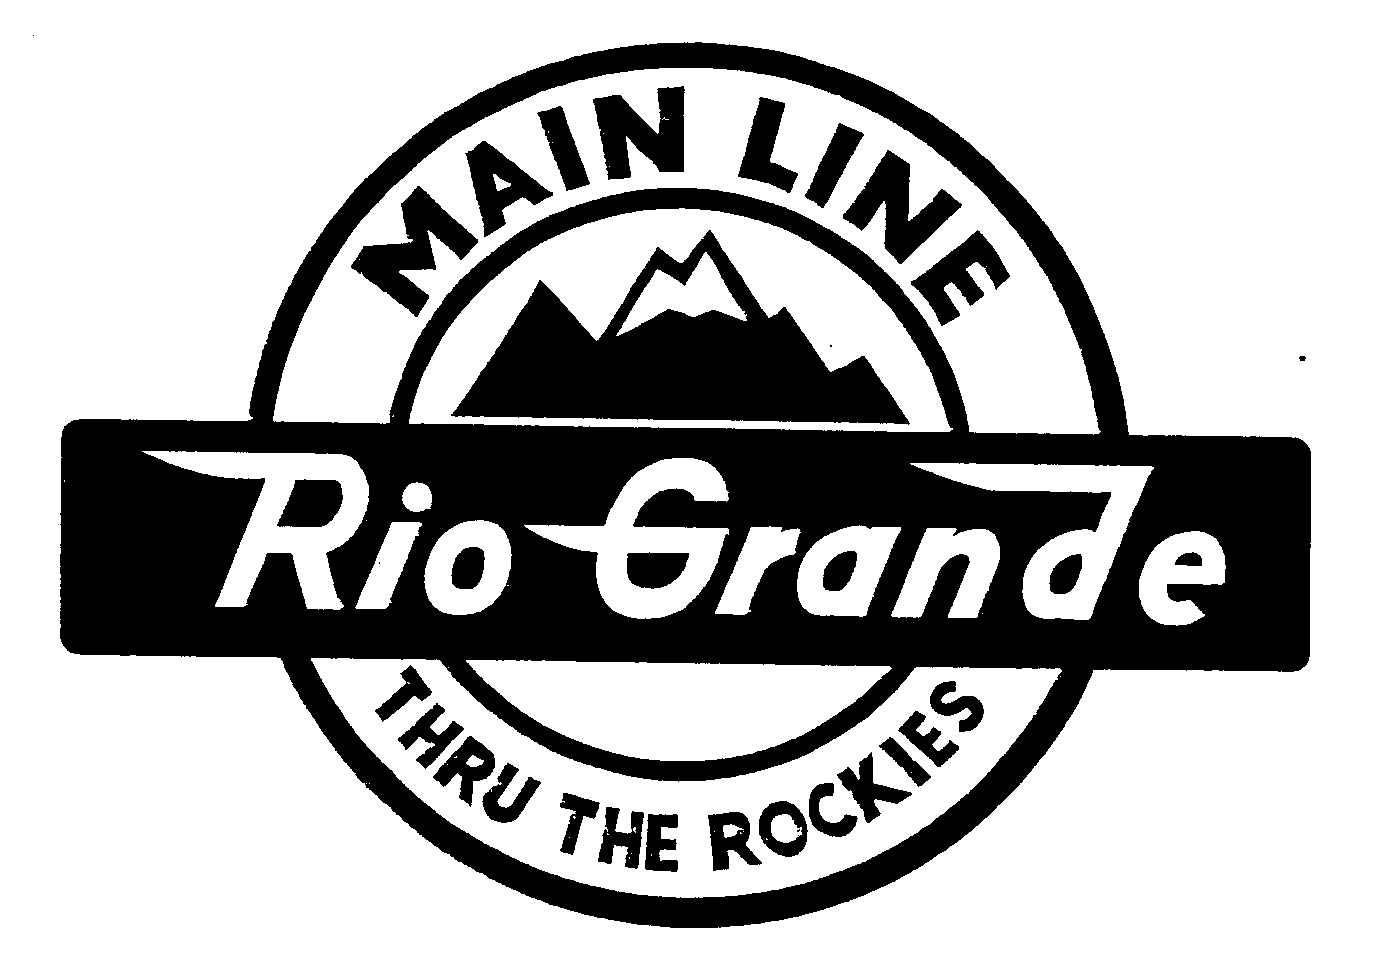  MAIN LINE RIO GRANDE THRU THE ROCKIES